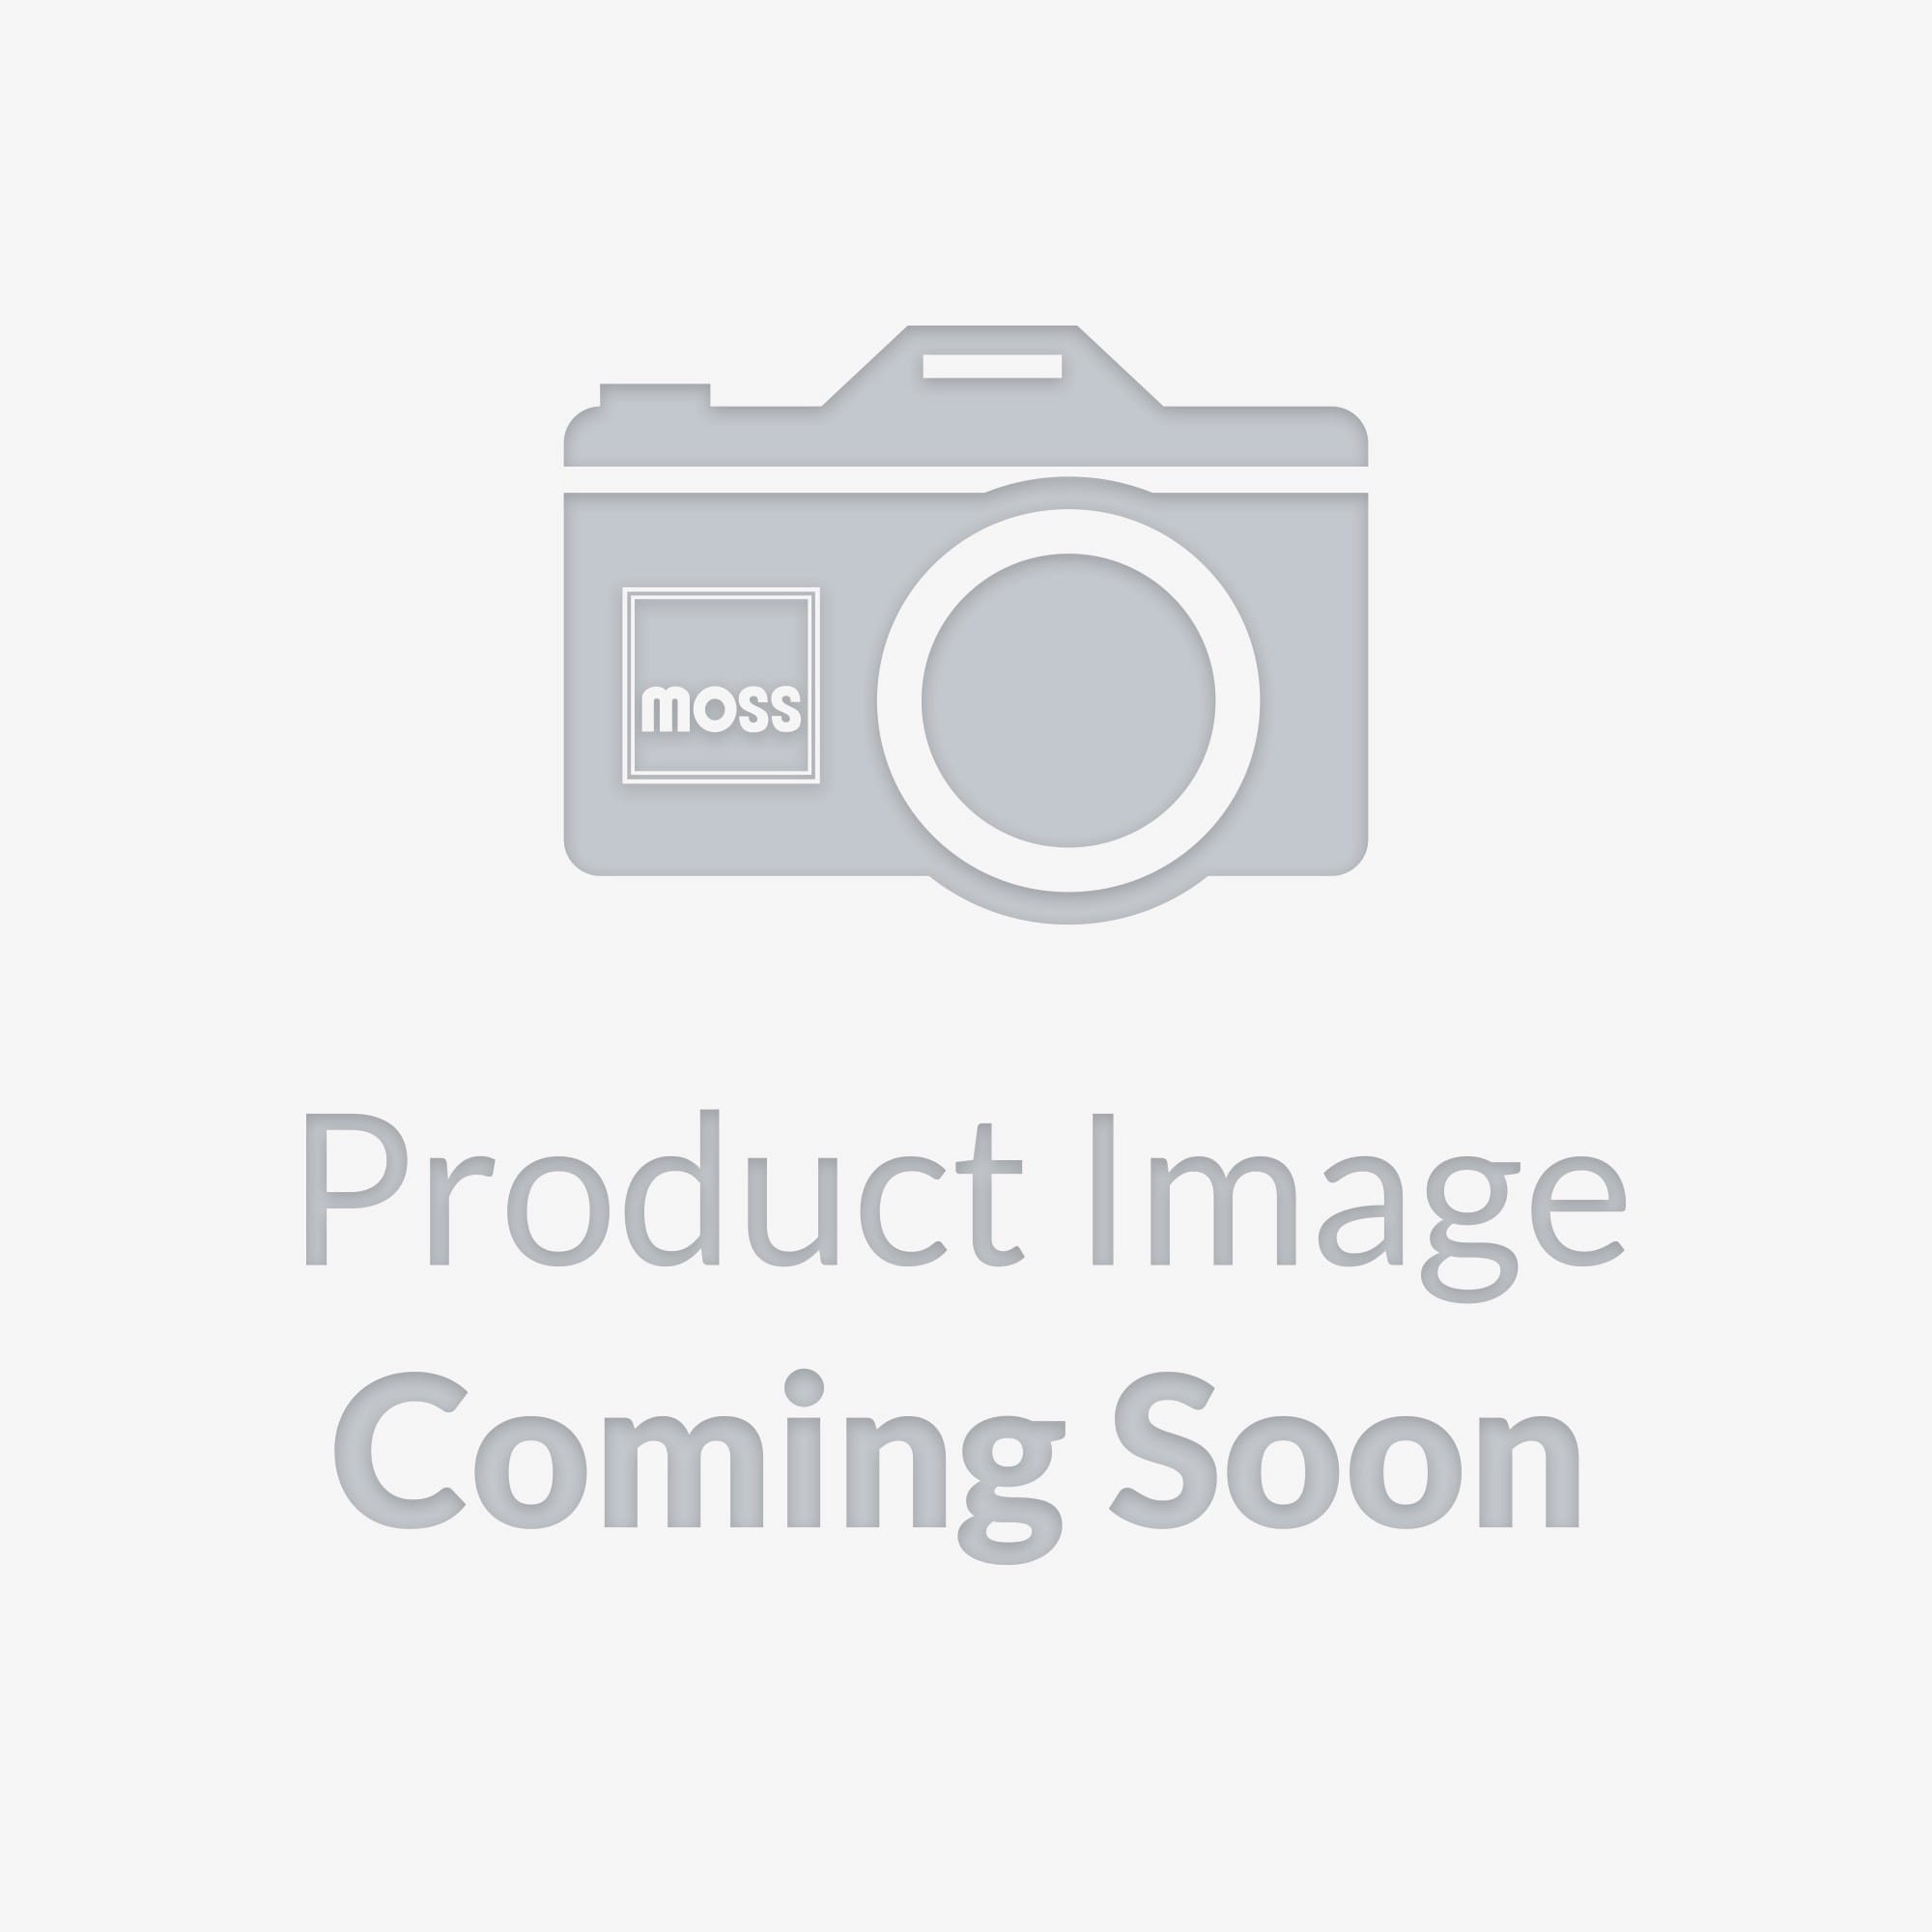 Brand New Classic Style Luggage Rack for 1990-2015 Mazda Miata MX5  Retro Rack